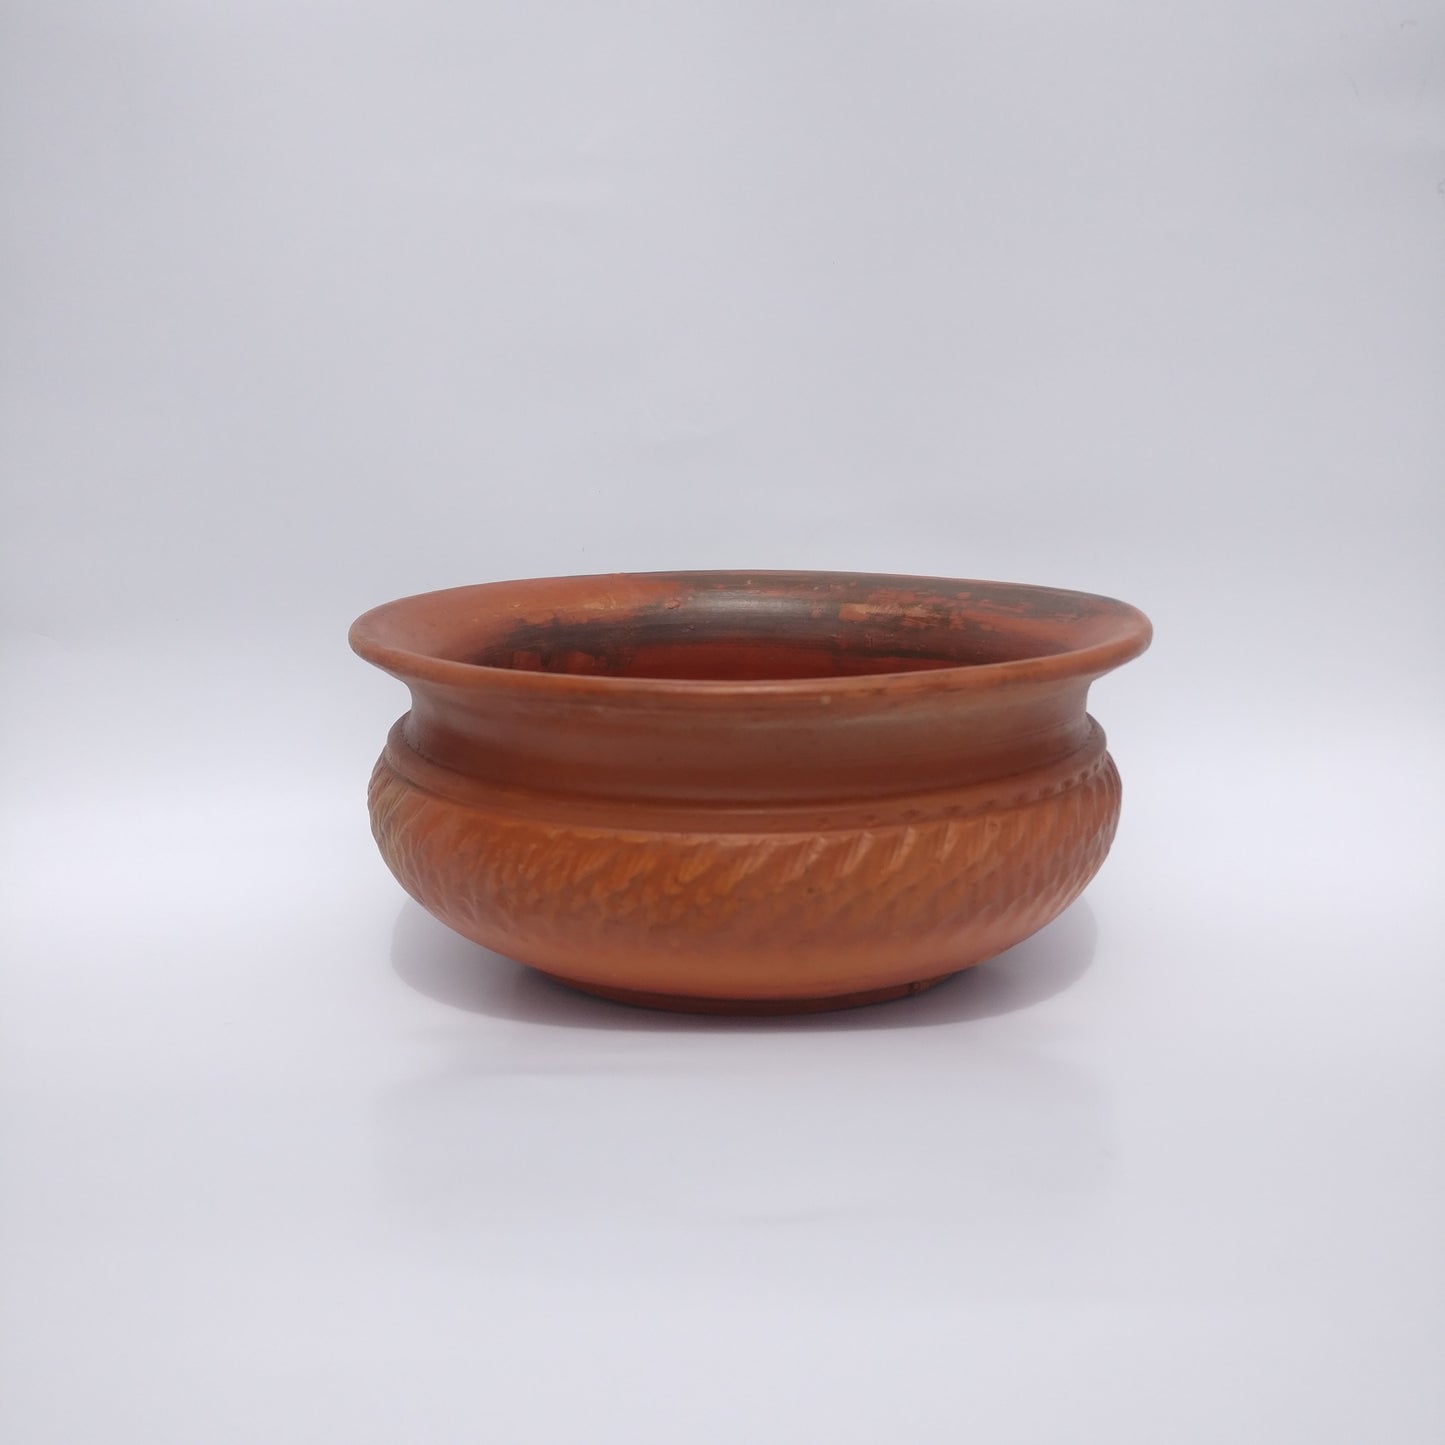 A dark orange clay pot